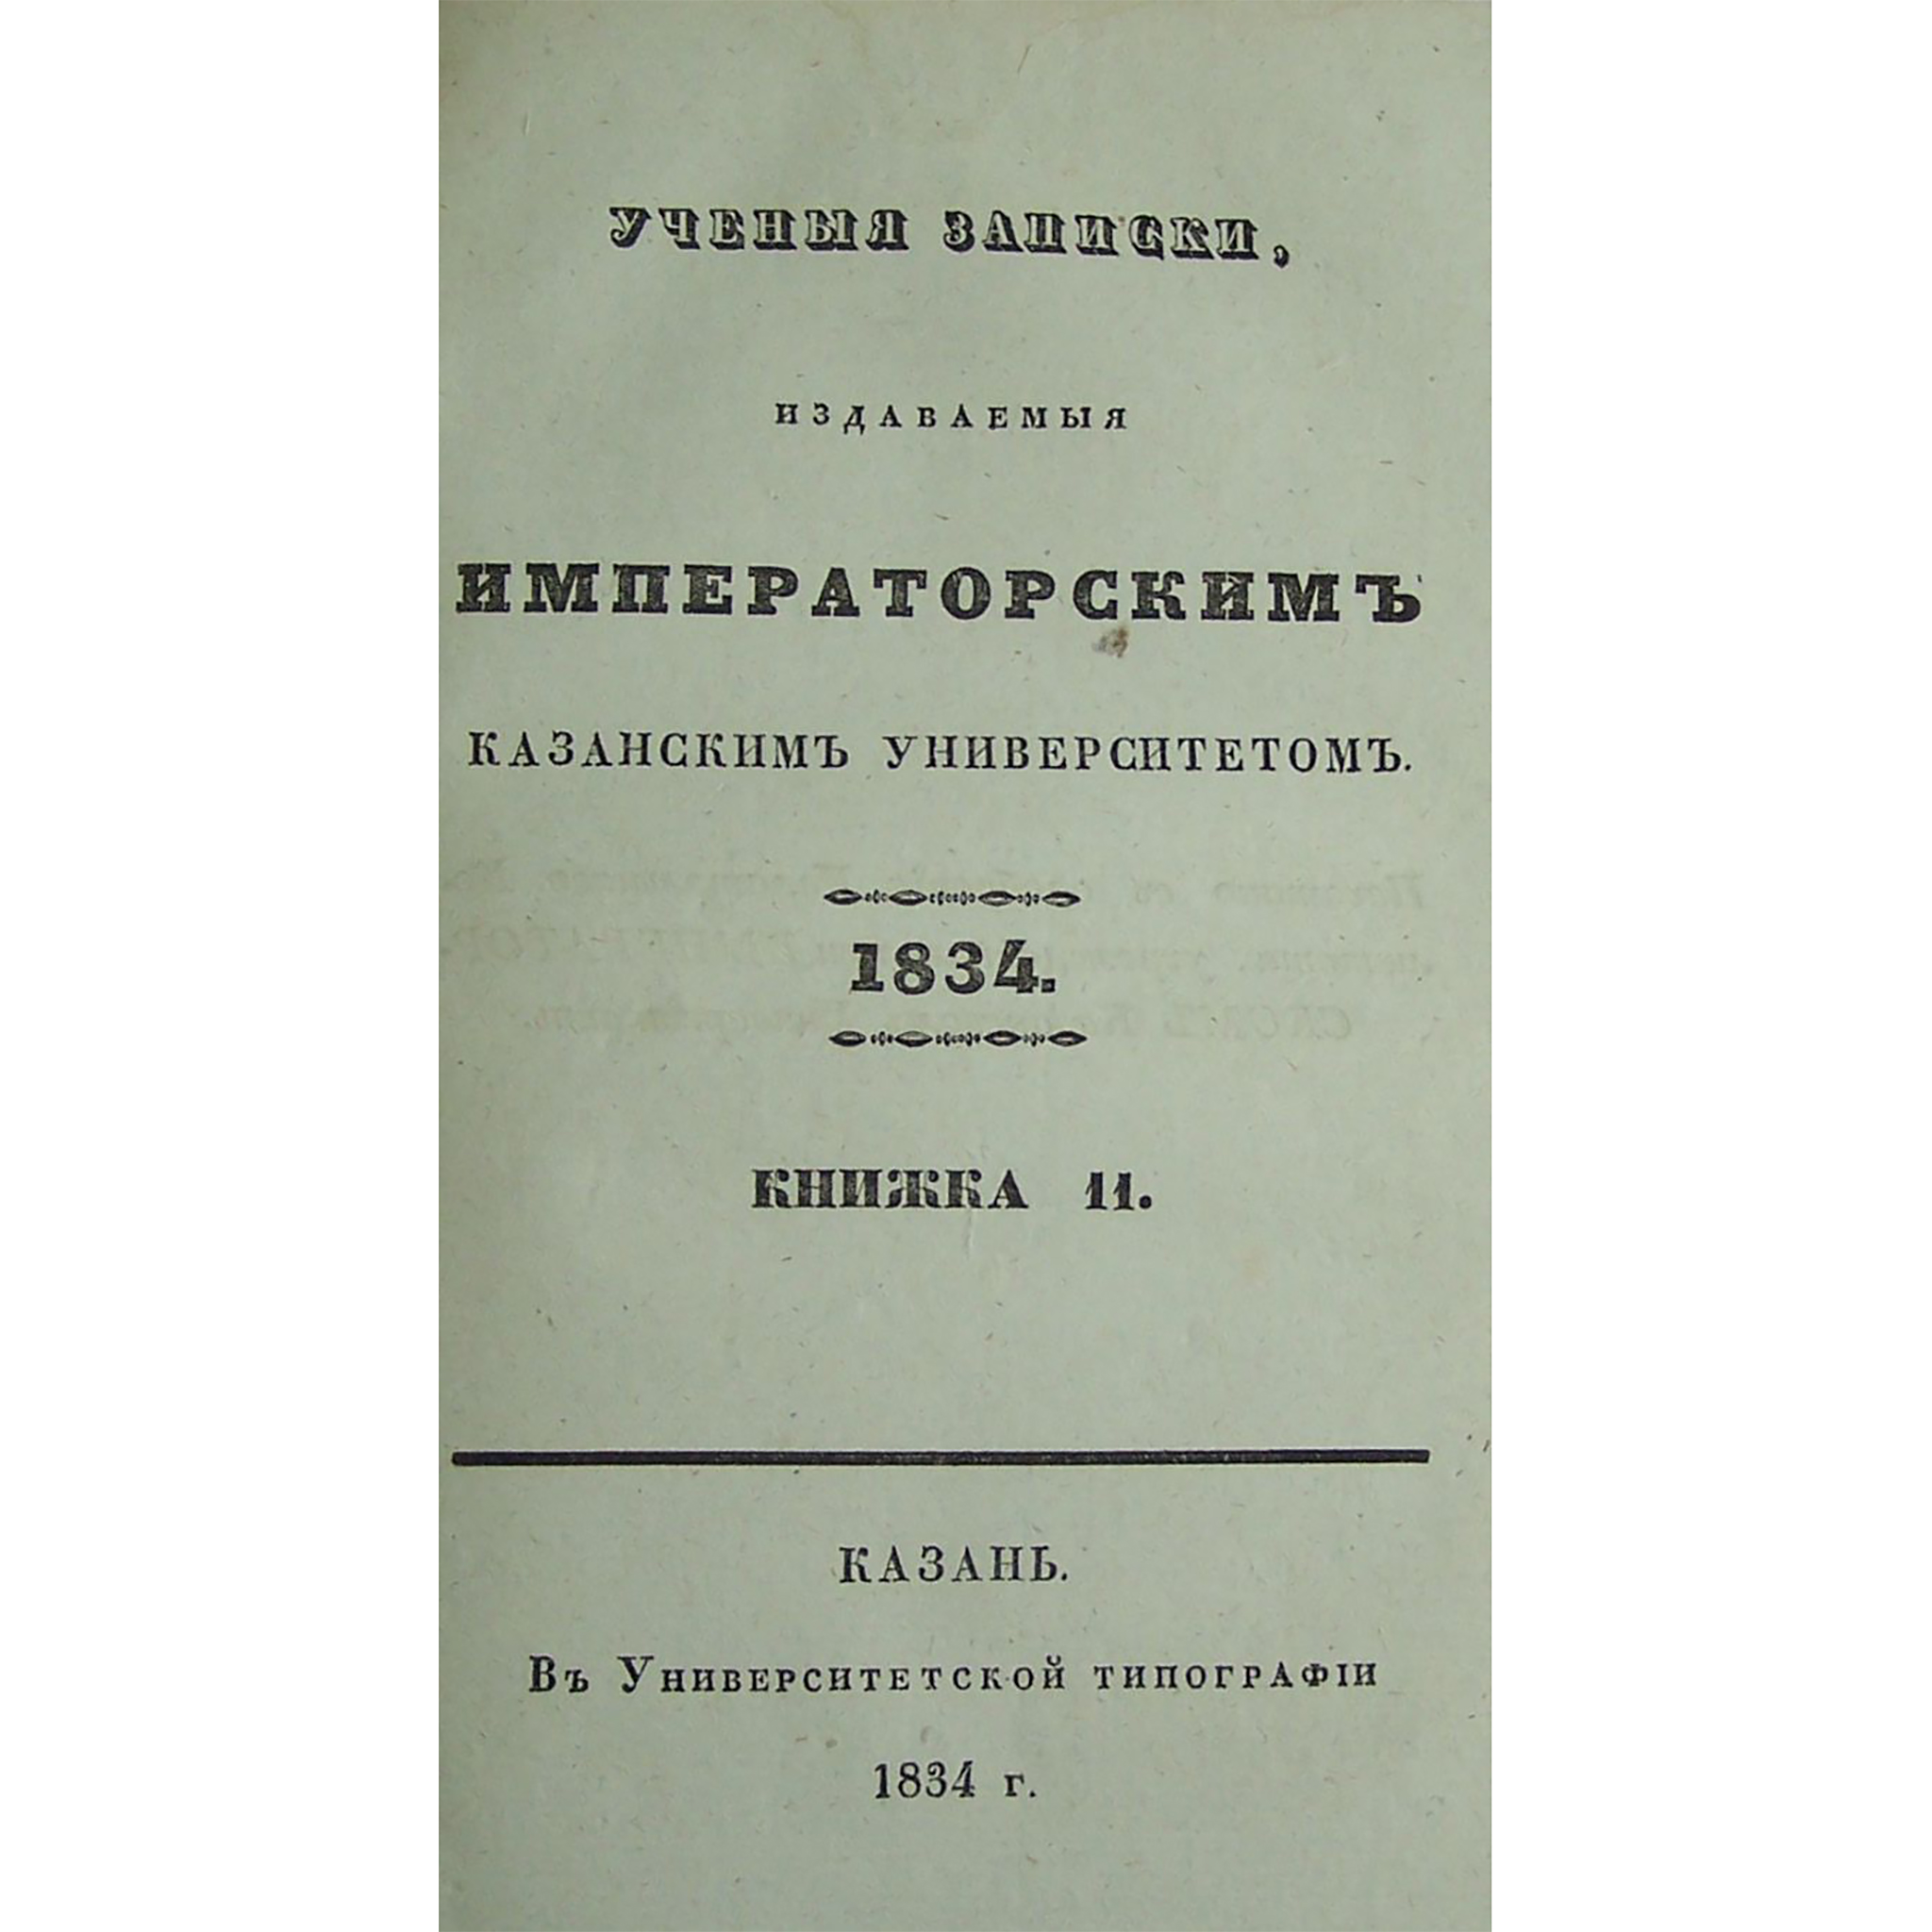 Russia - Lobachevsky, Nikolai Ivanovich Ob ischezanii trigonometricheskikh strok [On the